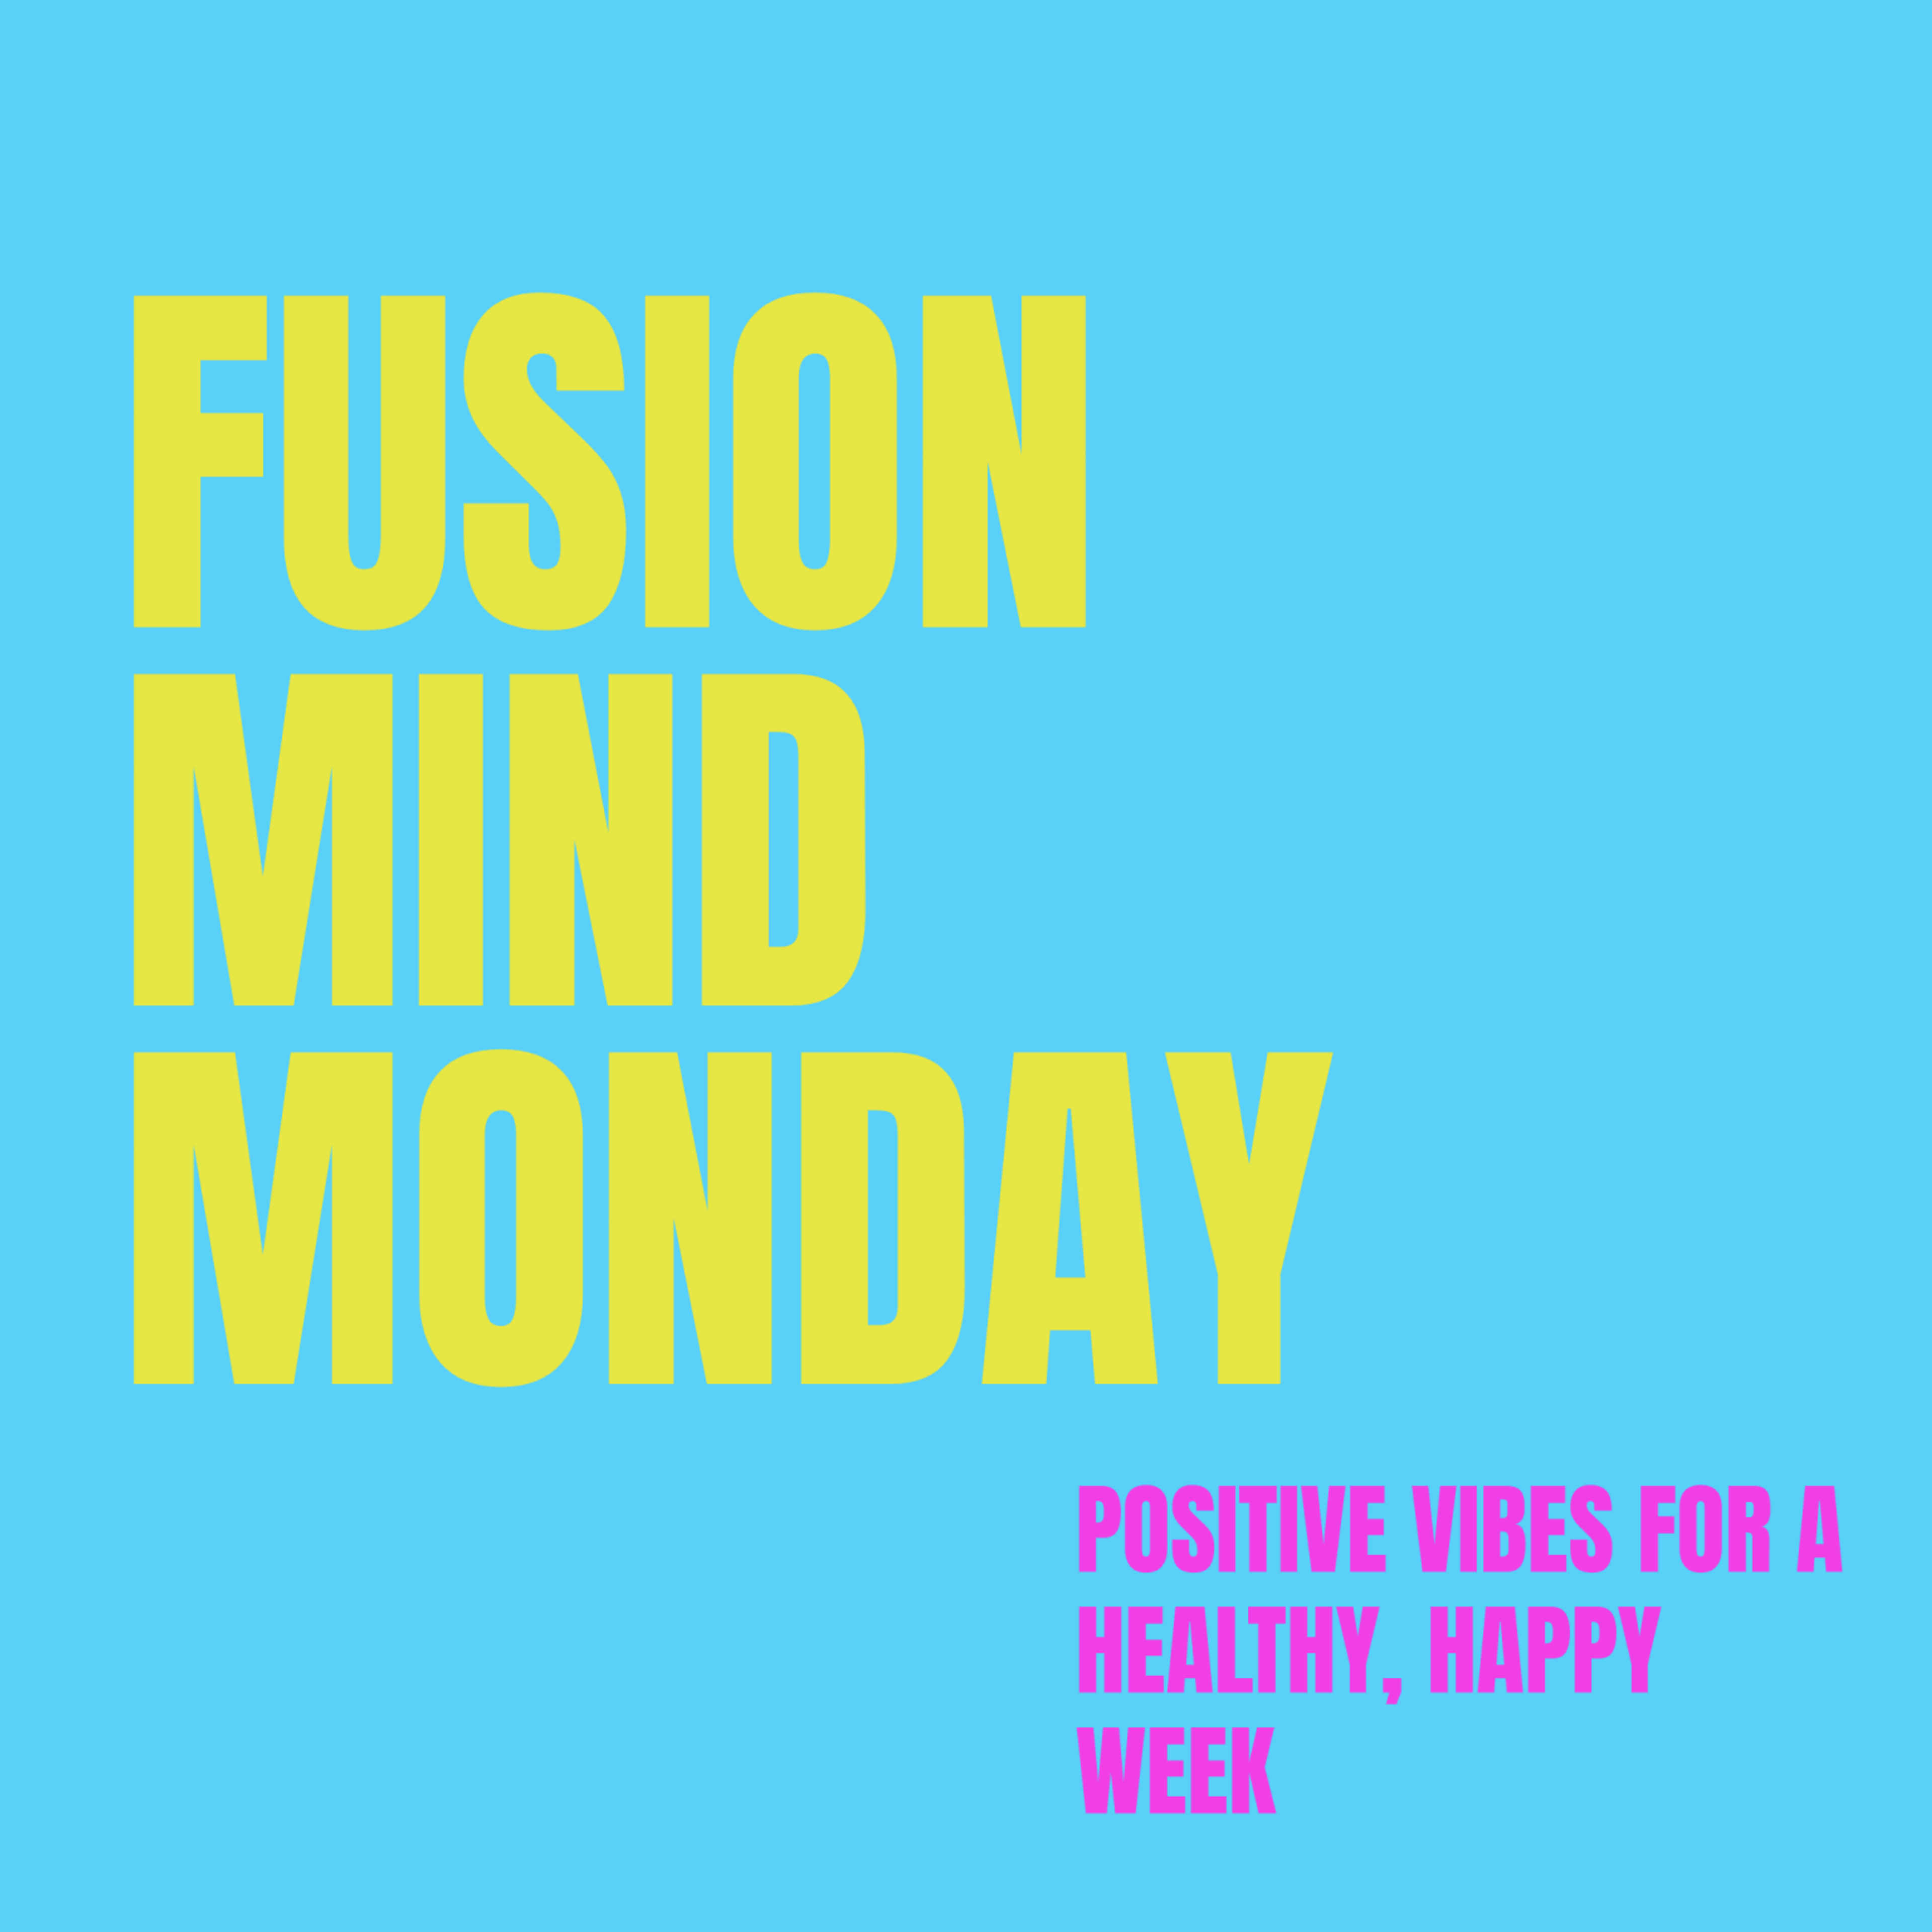 Image for blog post: Fusion Mind Monday – November 2nd